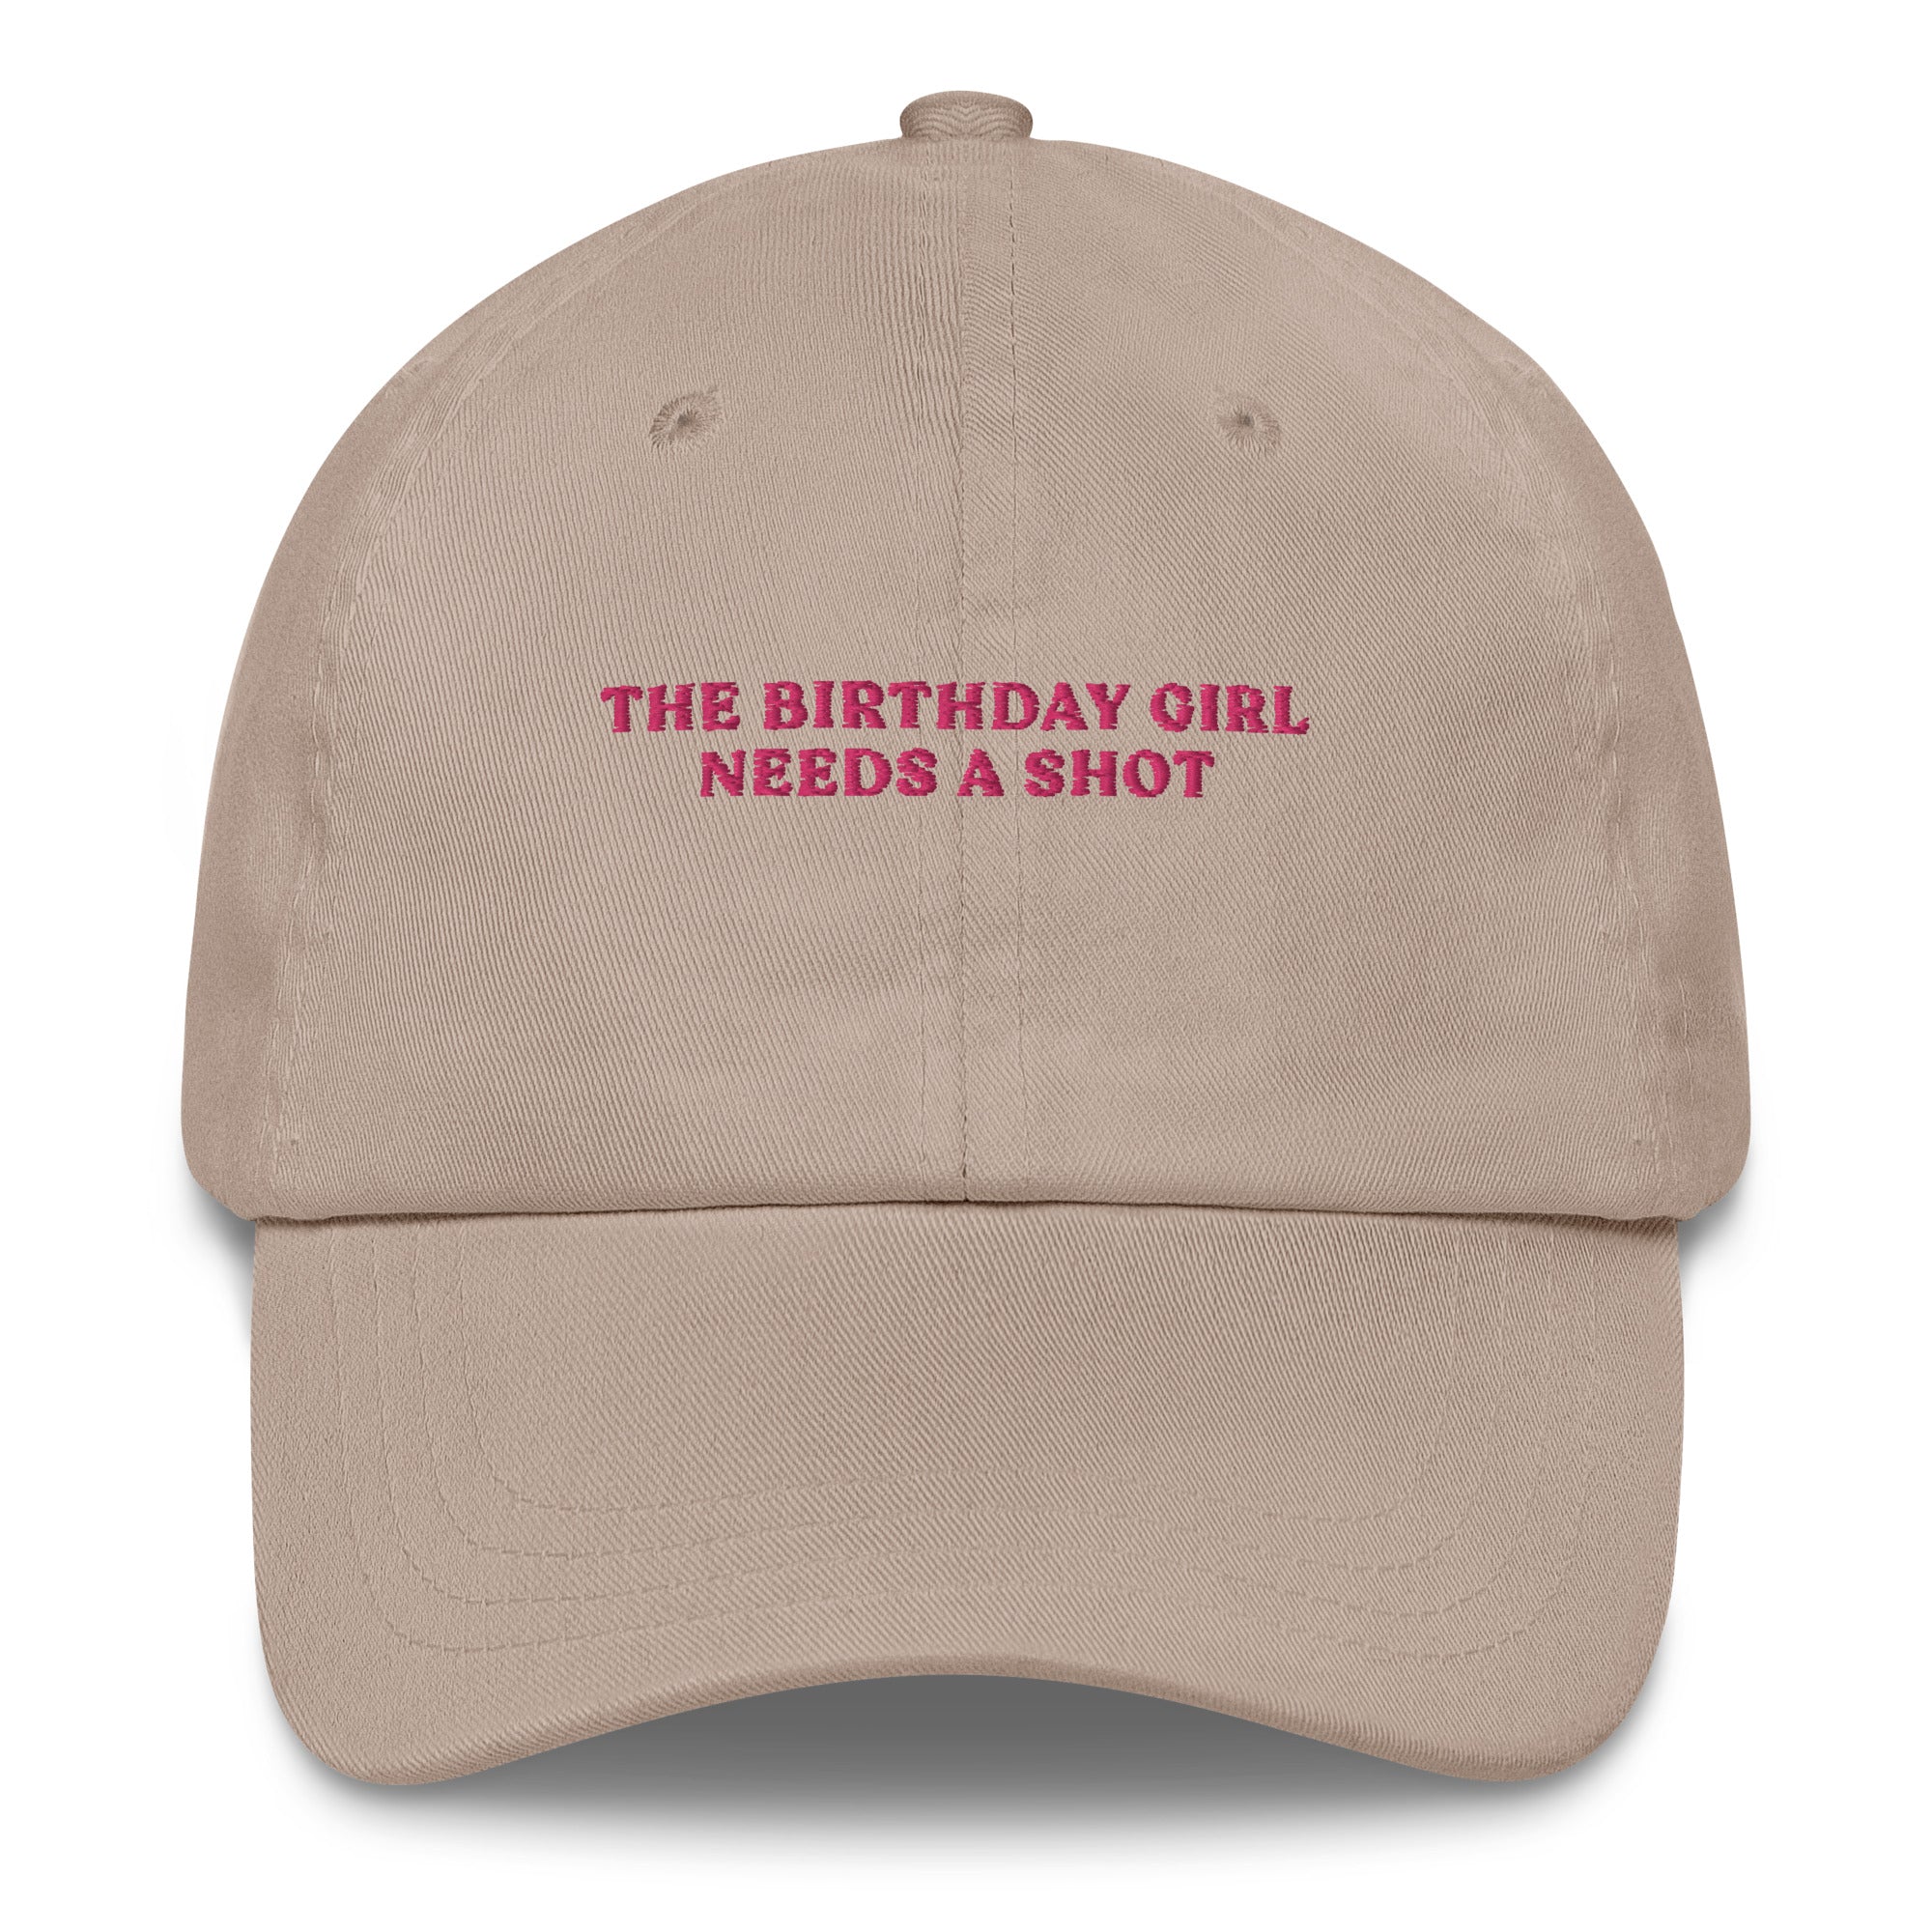 The Birthday Girl needs a Shot - Cap